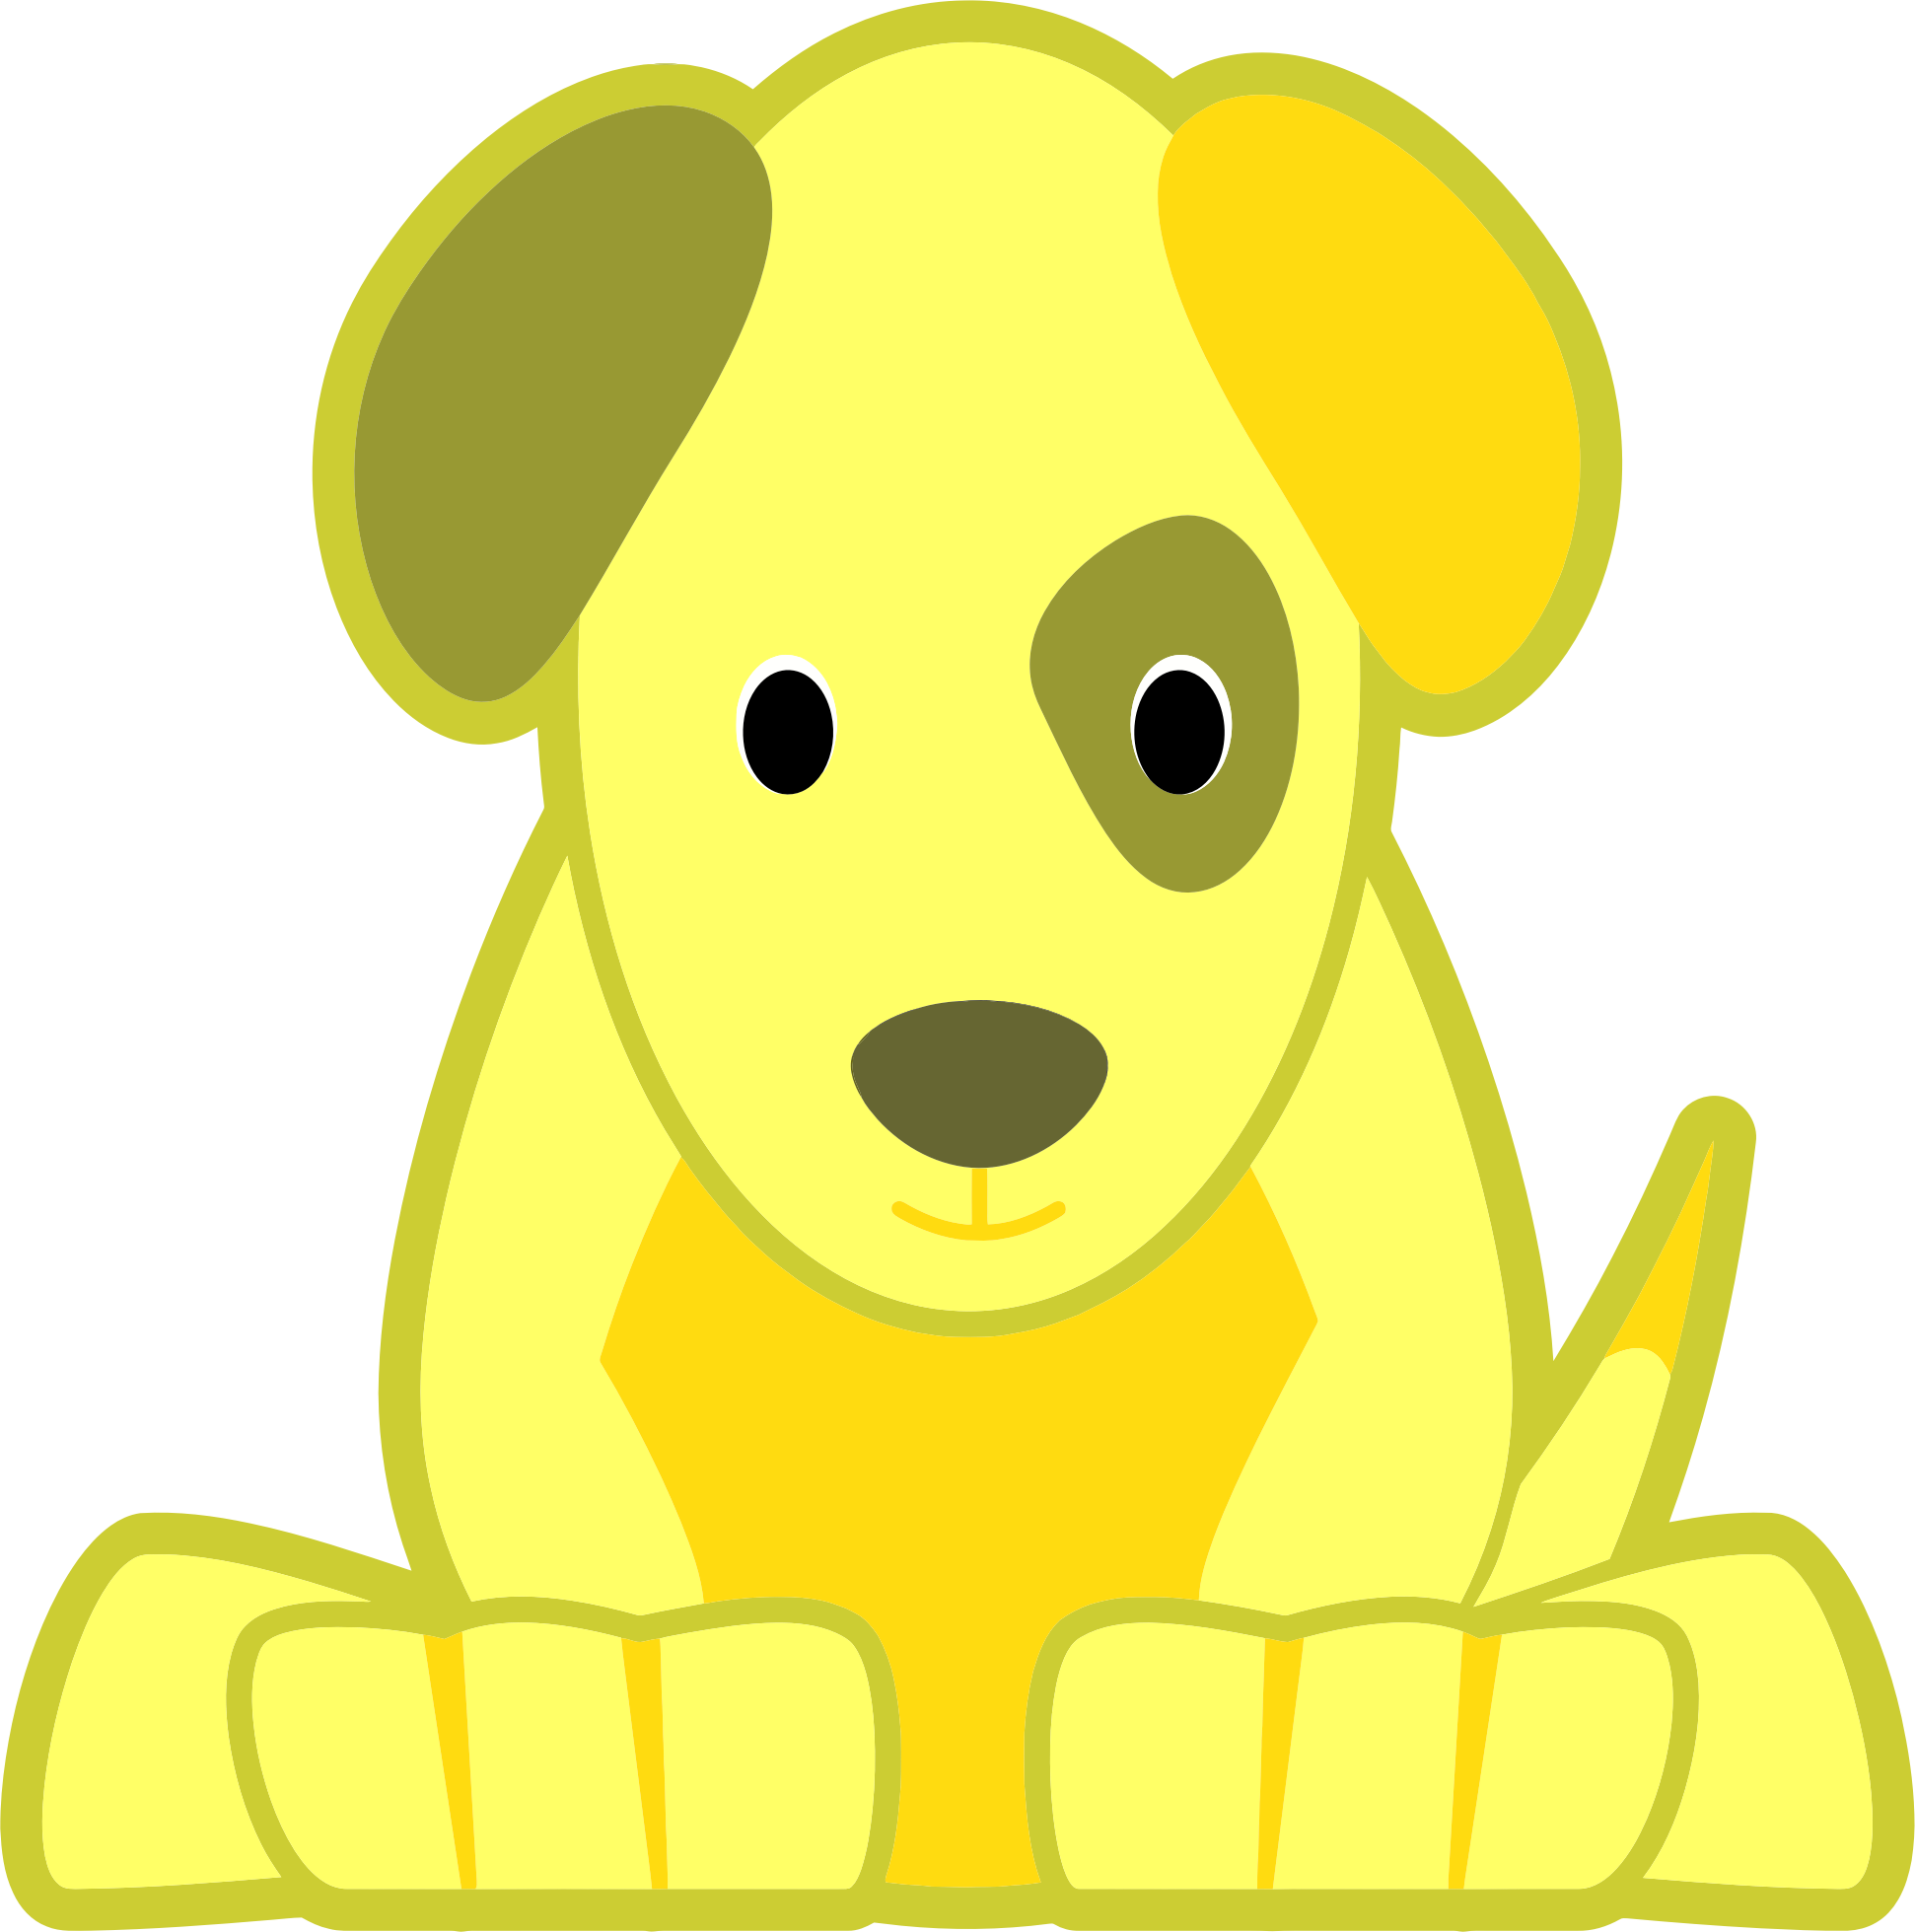 yellow dog clipart